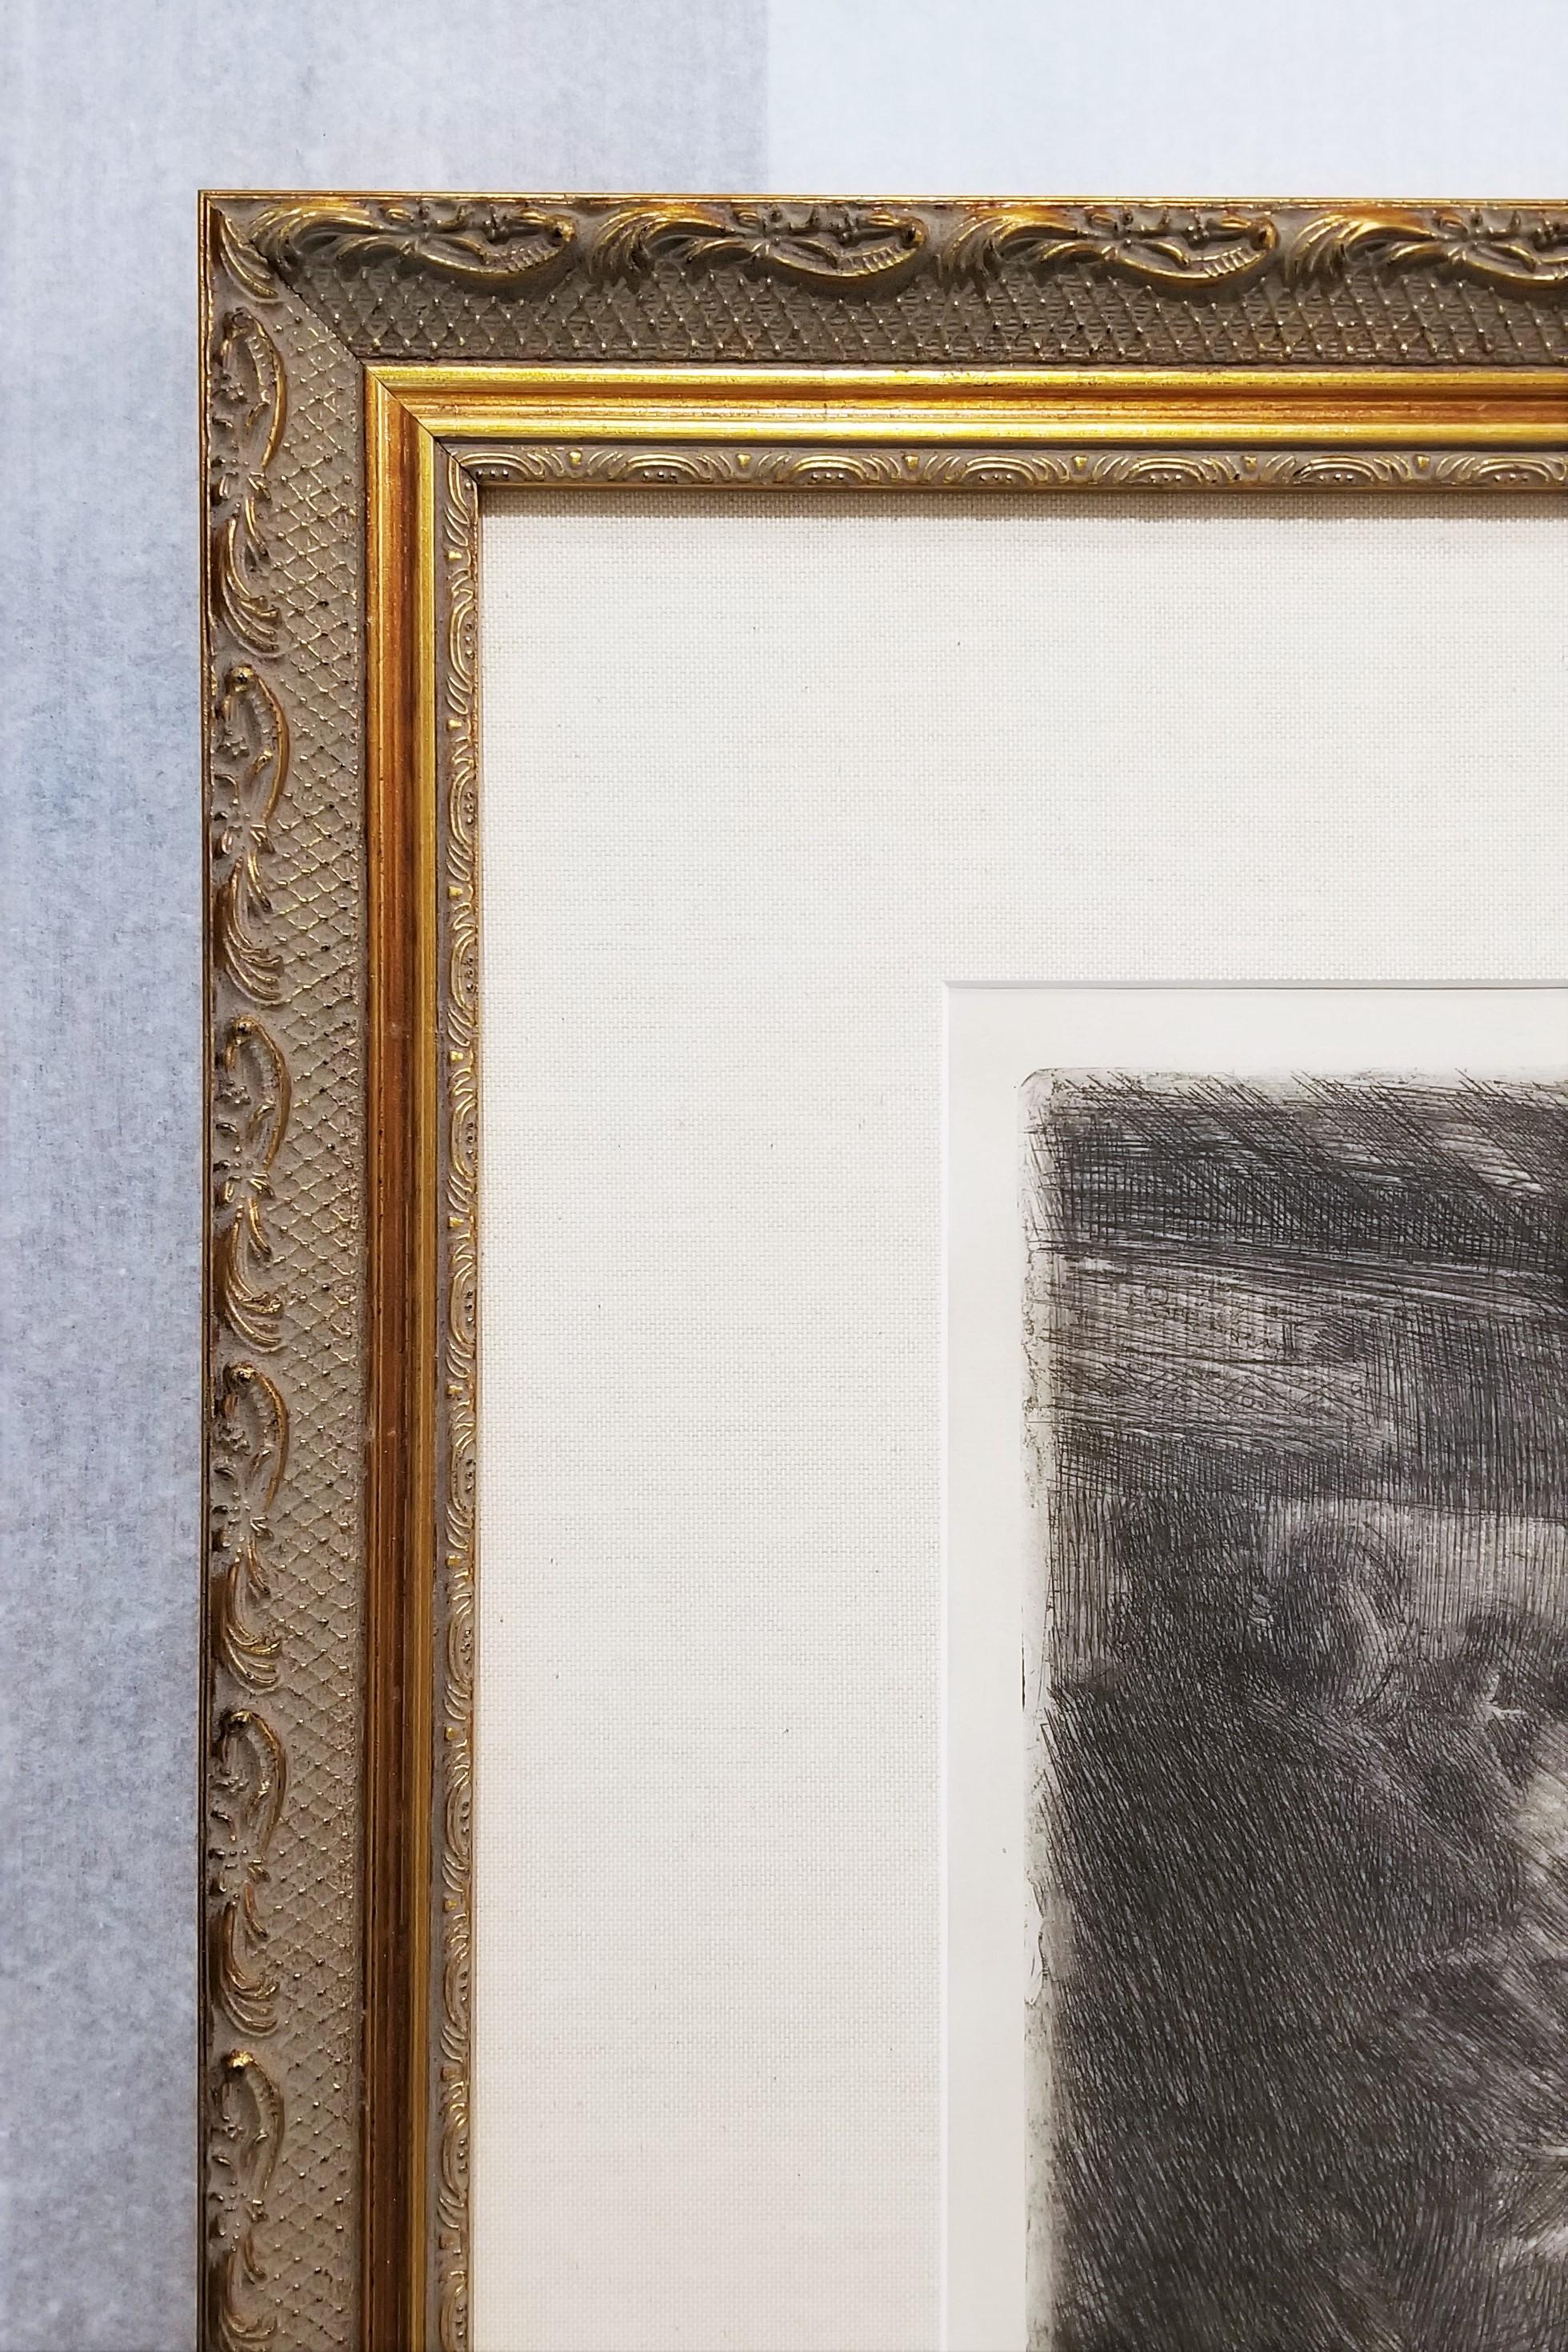 Artist: Anders Zorn (Swedish, 1860-1920)
Title: 